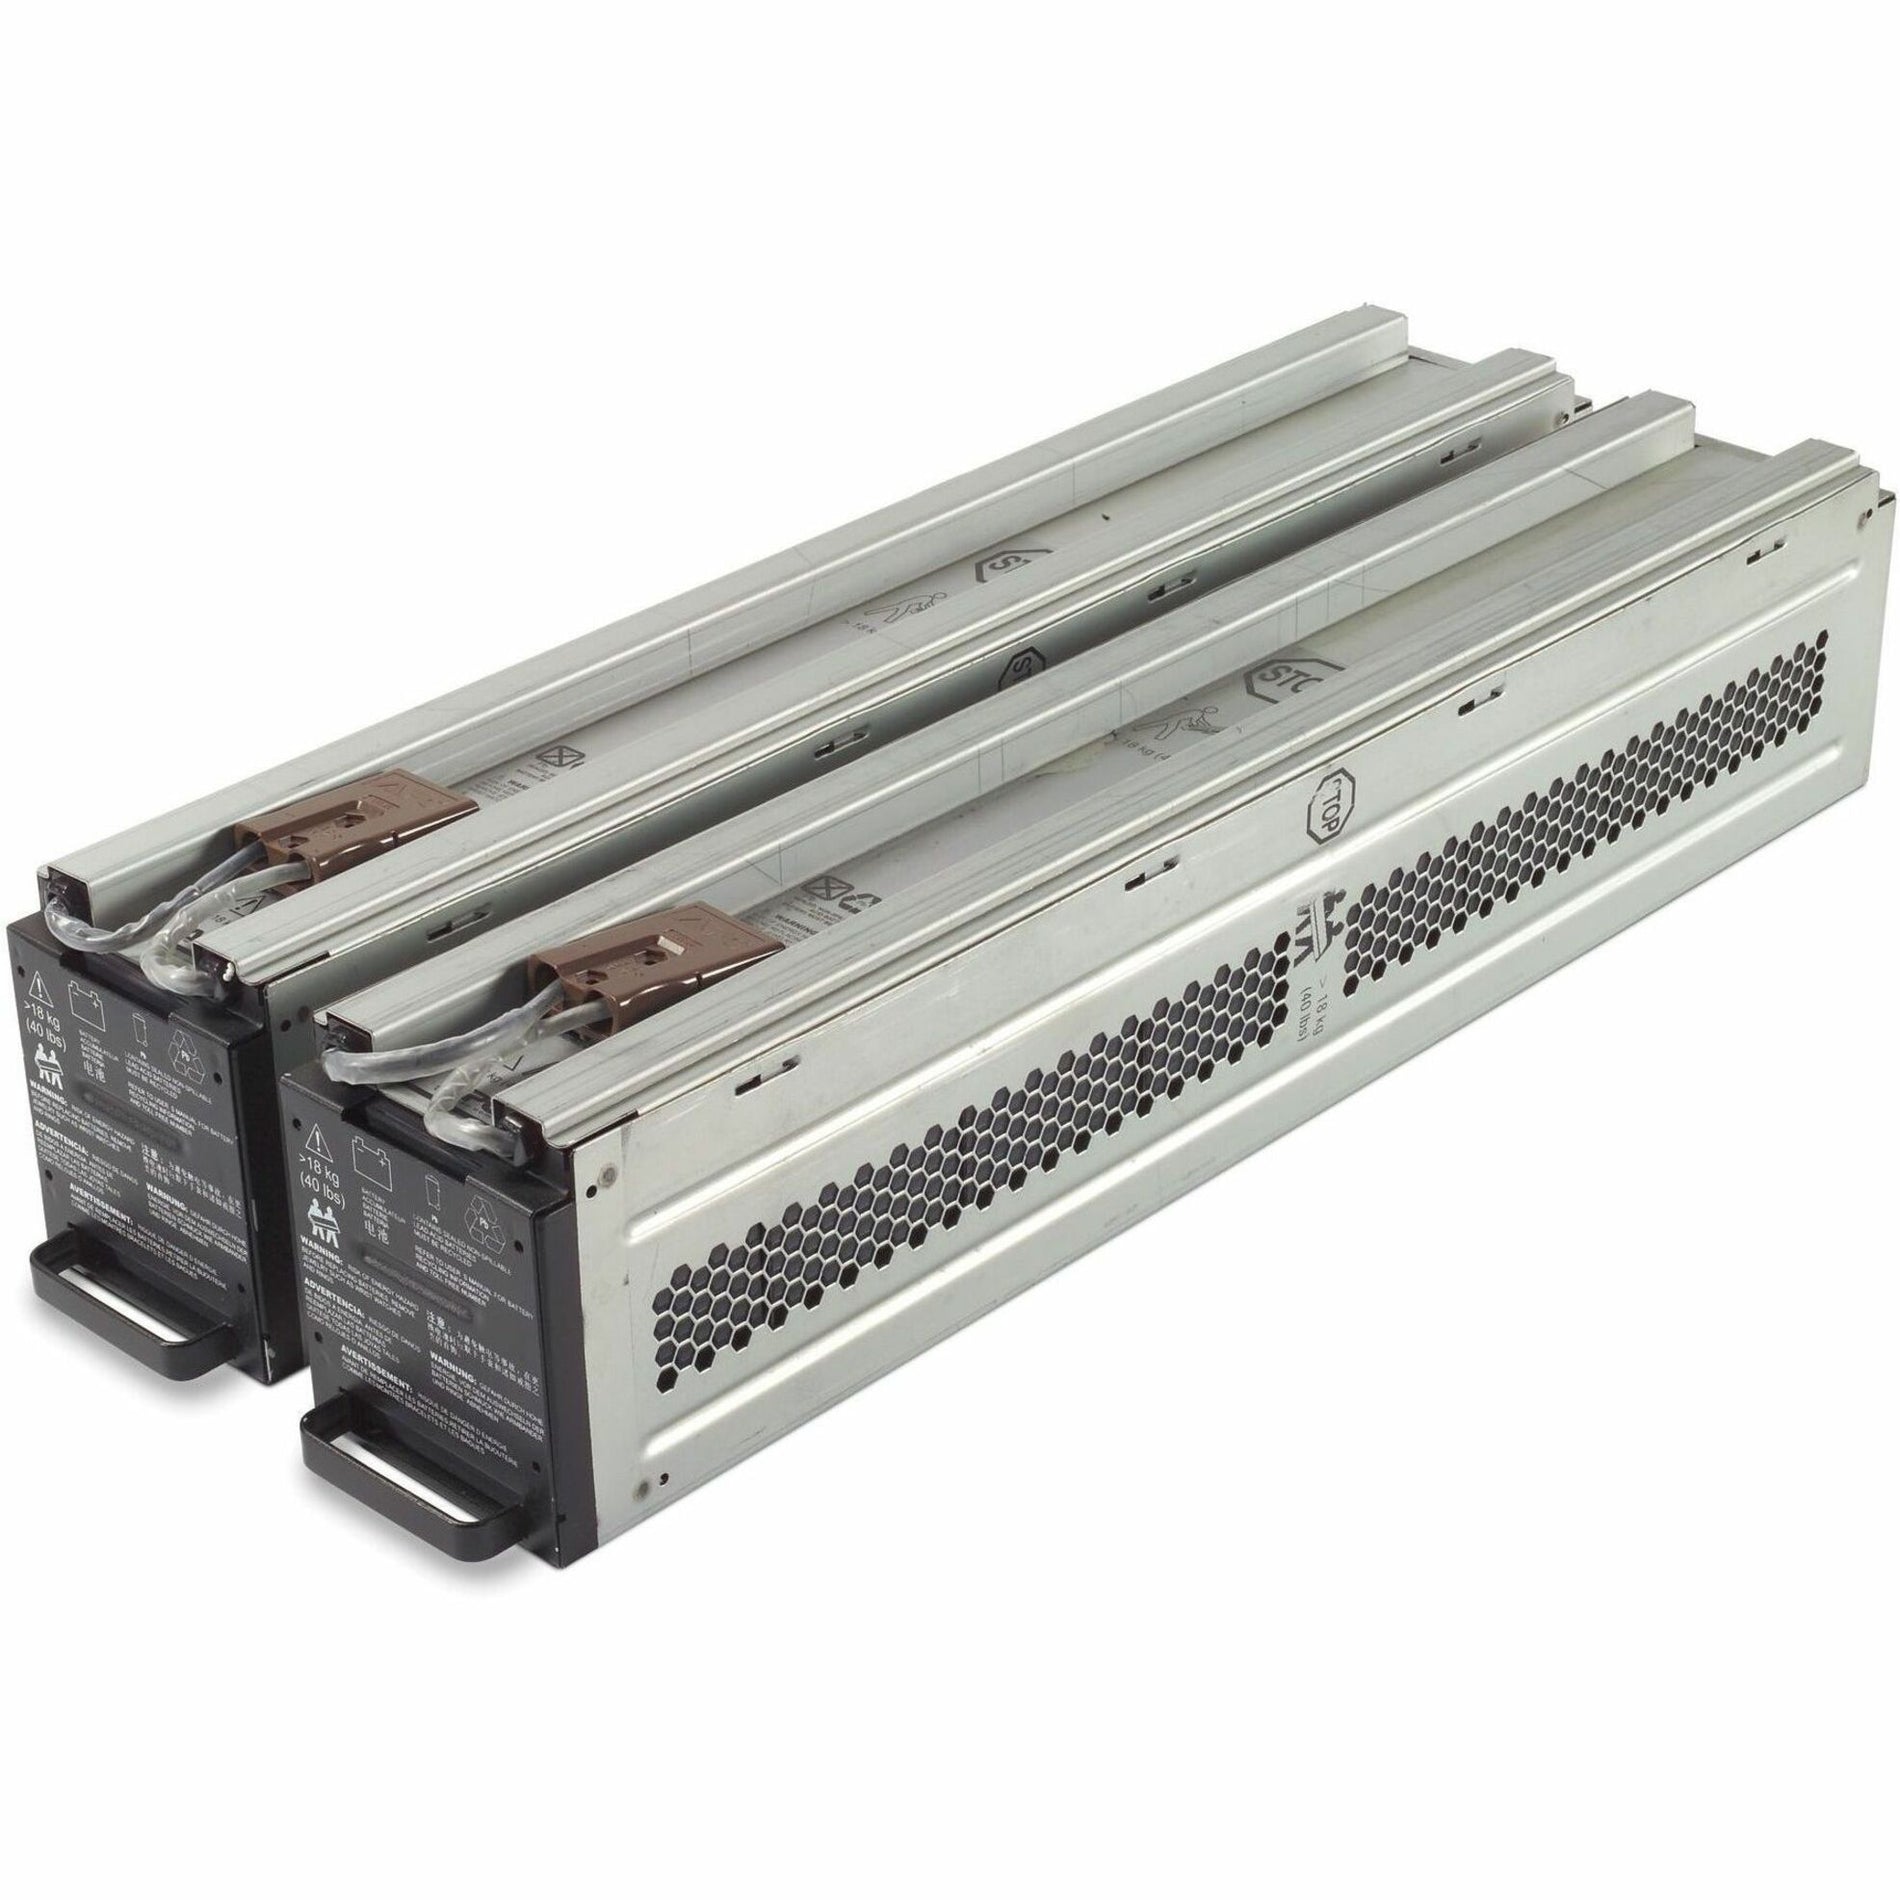 APC APCRBC140 Replacement Battery cartridge #140, 2 Year Limited Warranty, 960 VAh, 192 V DC